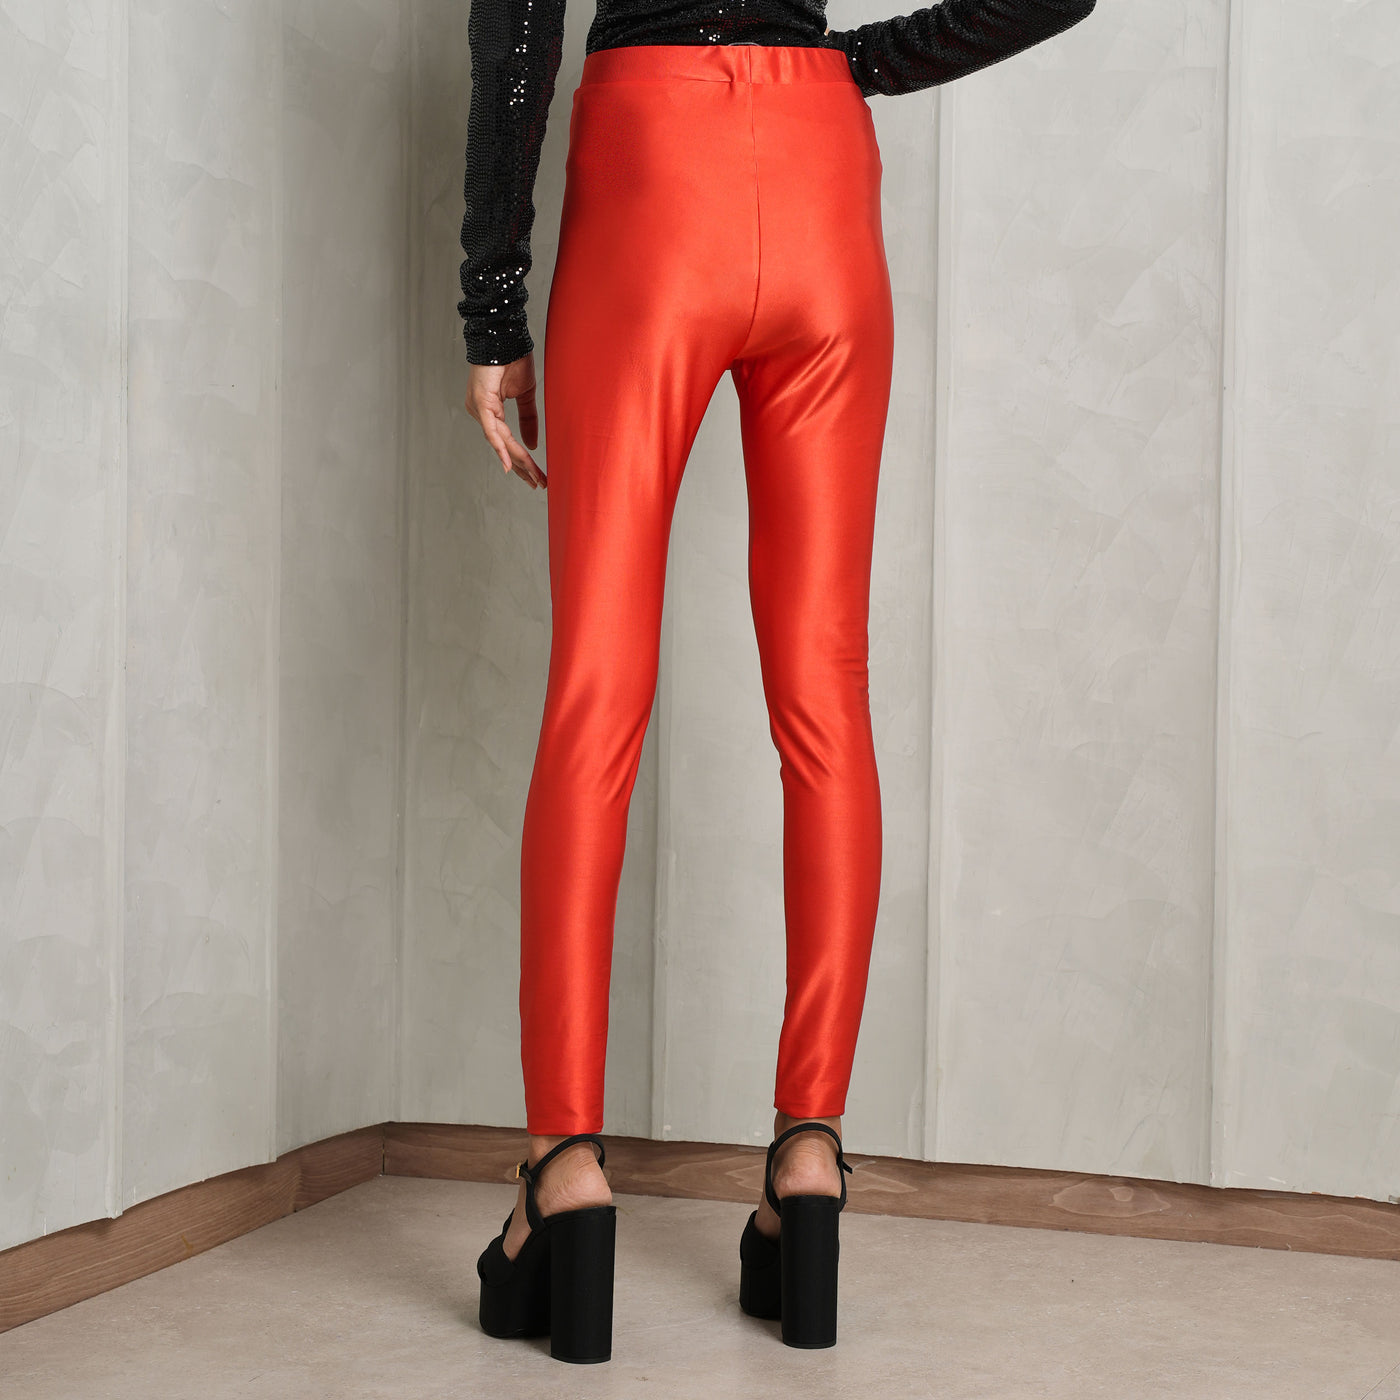 ALEXANDRE VAUTHIER reflective red high waist leggings